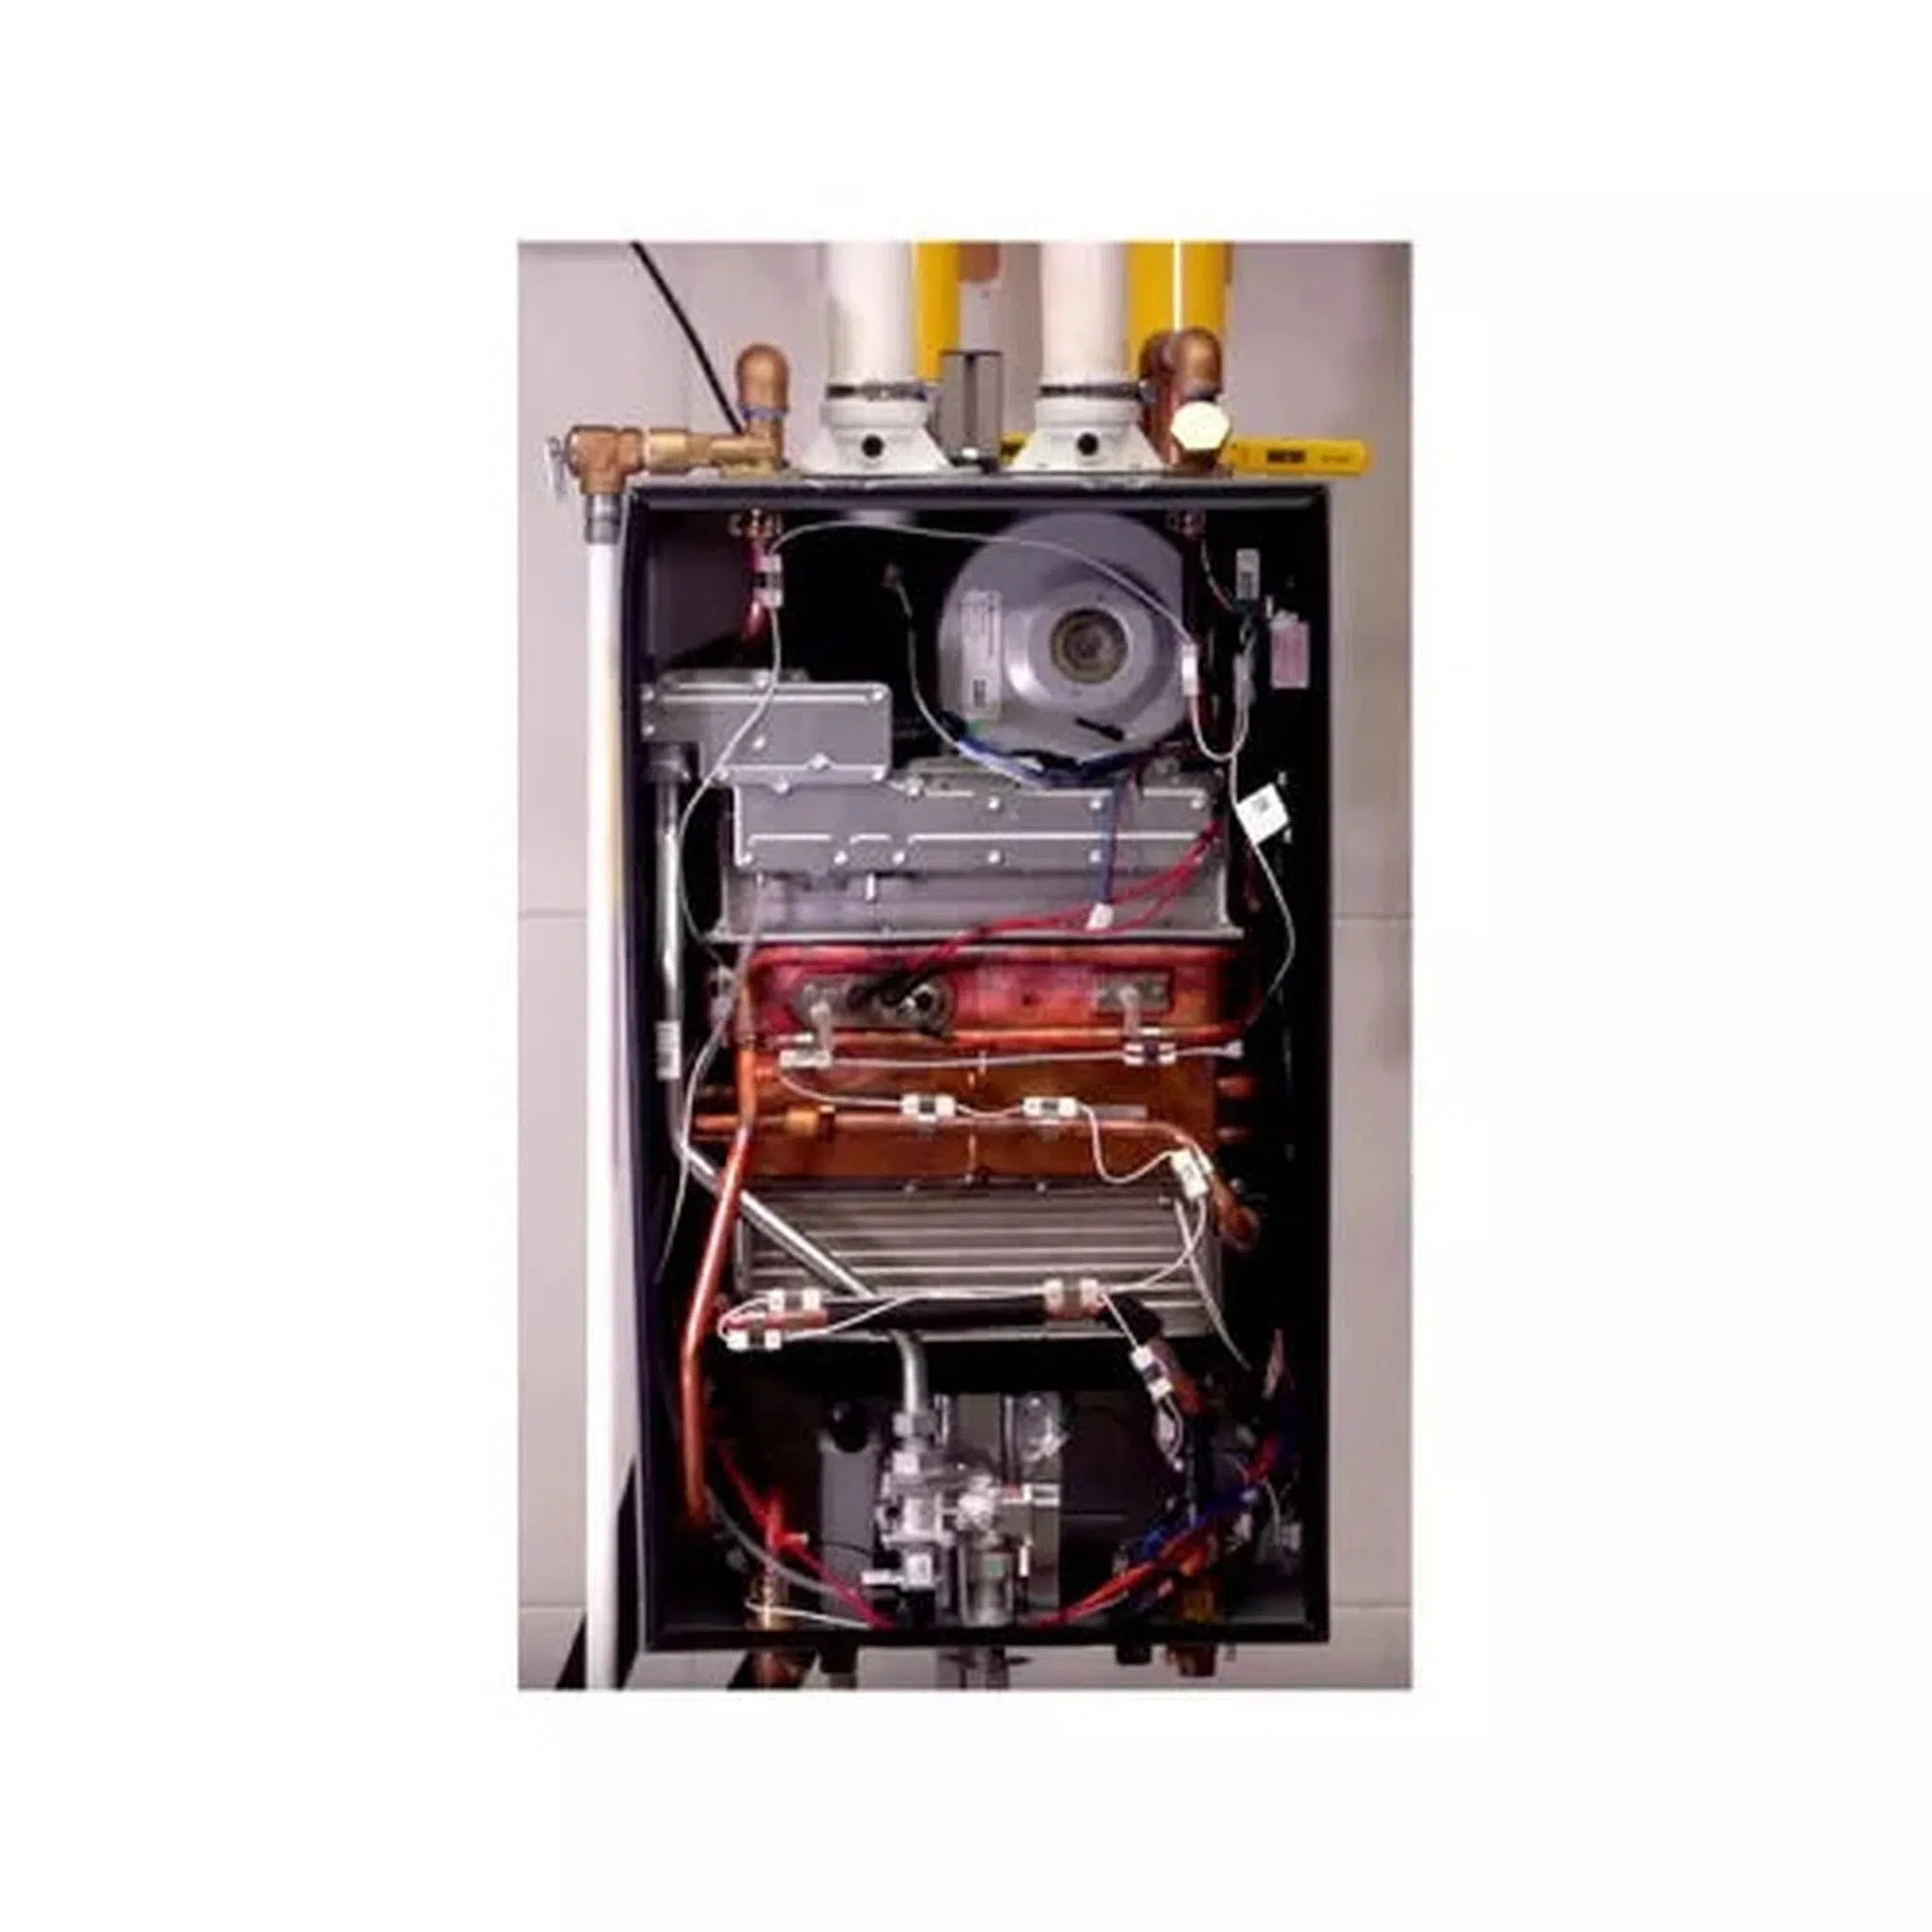 Bradford White Infiniti K RTG-K-160-N1 Rectangular Indoor Condensing Tankless Gas Water Heater With Steadiset Technology and Digital Control